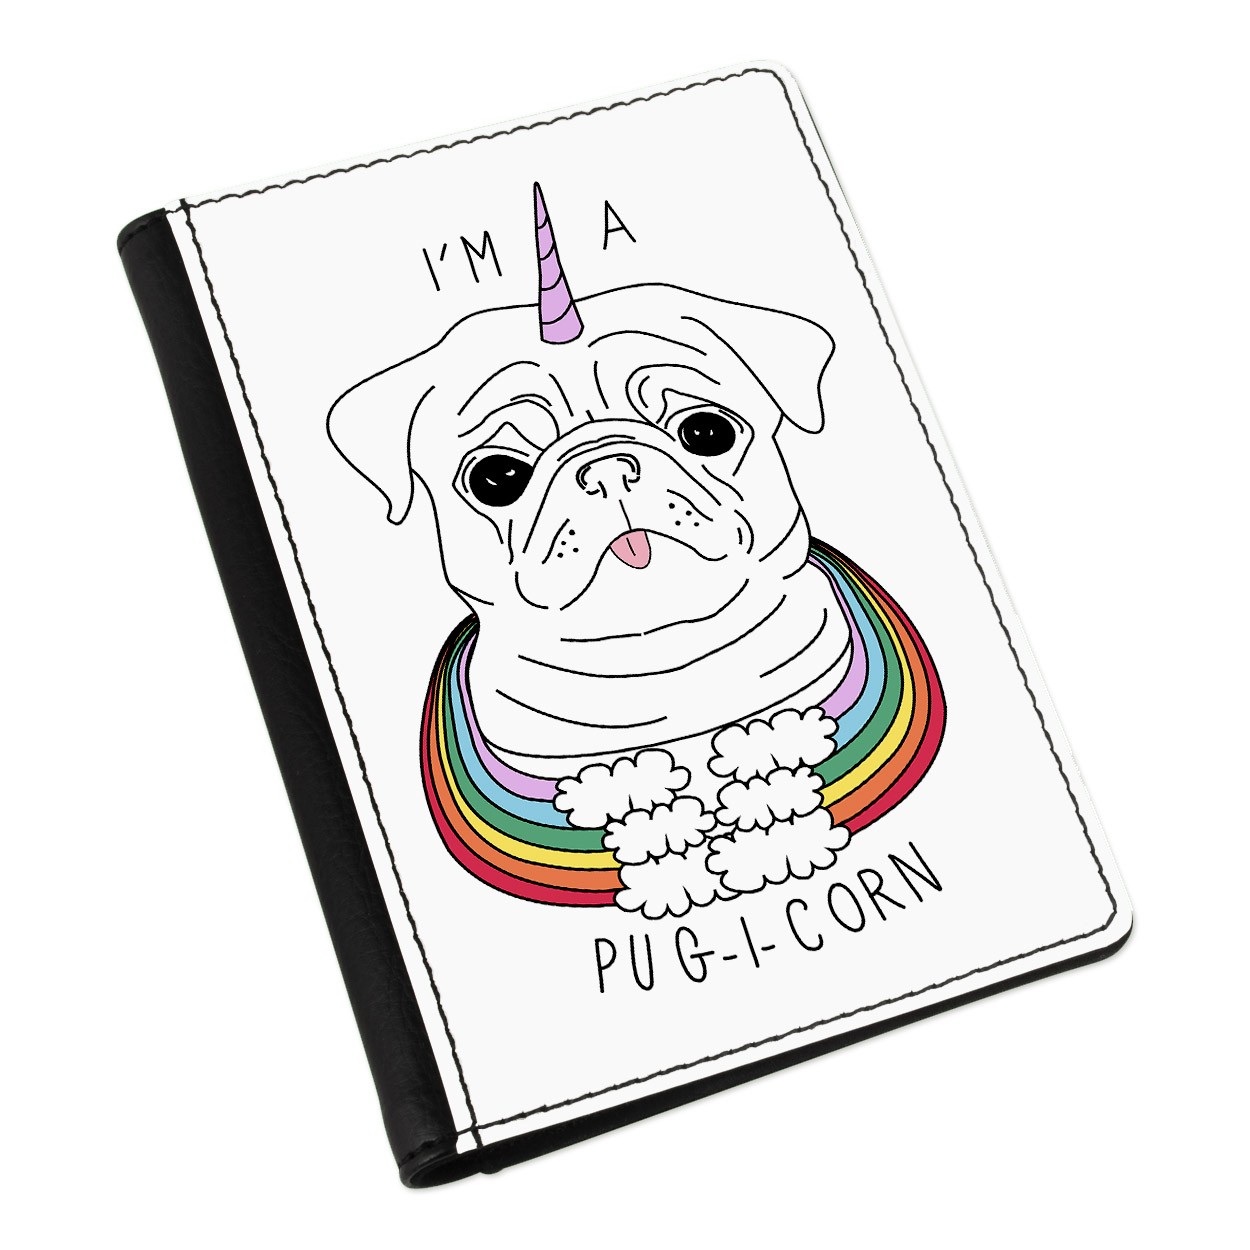 I'm A Pugicorn Rainbow Passport Holder Cover